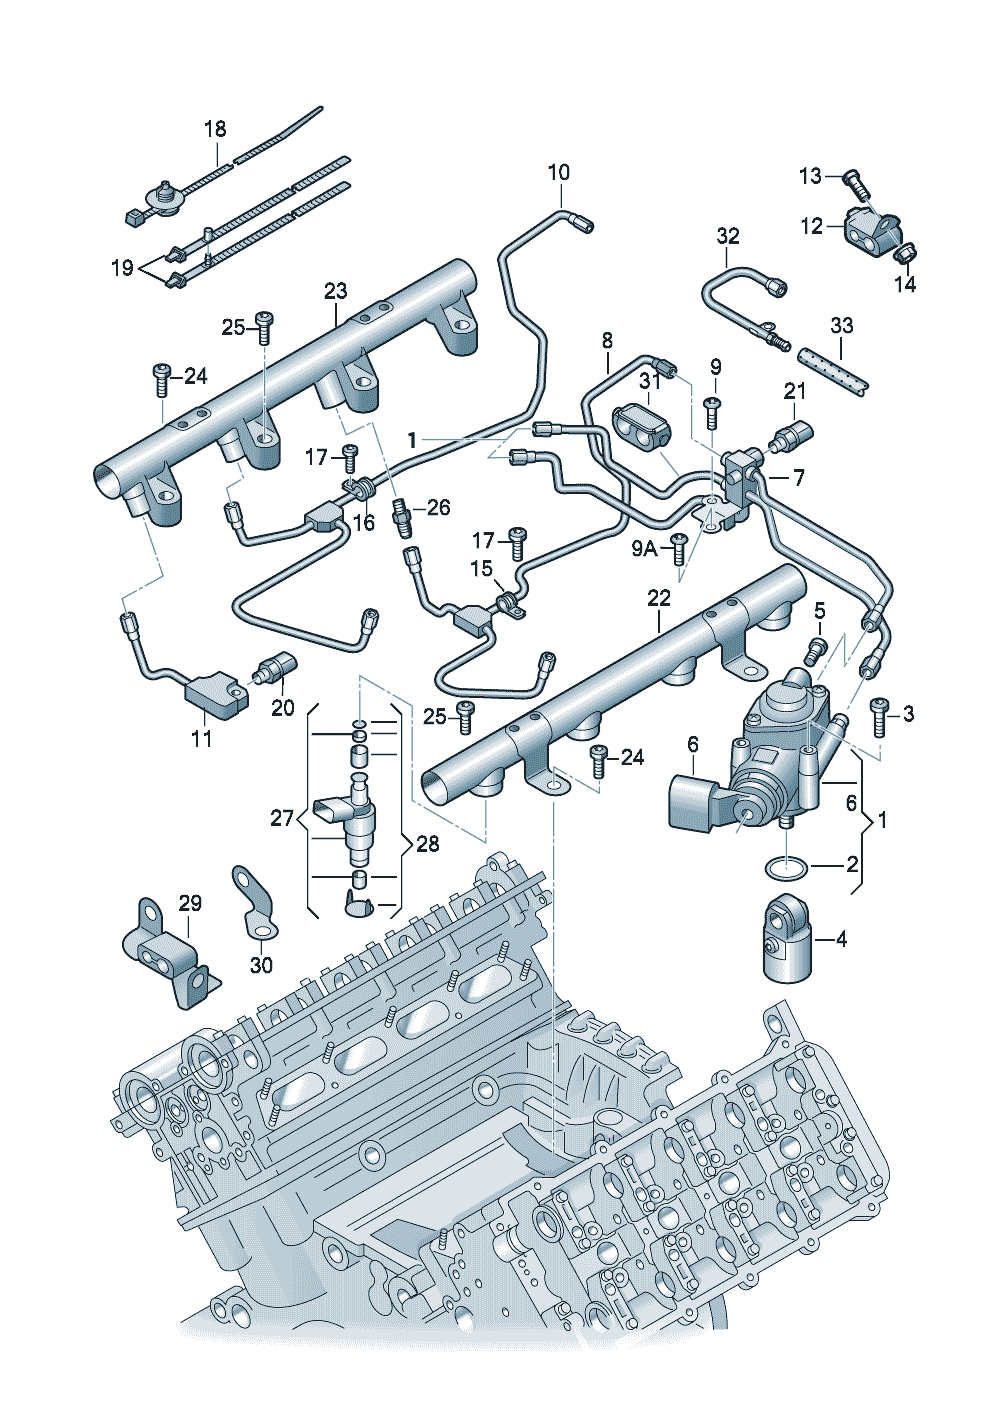 Fuel rail<br>Fuel pump<br>Injection valve<br> F             >> 4L-9-029 260 4.2 Ltr. - Audi Q7 - aq7